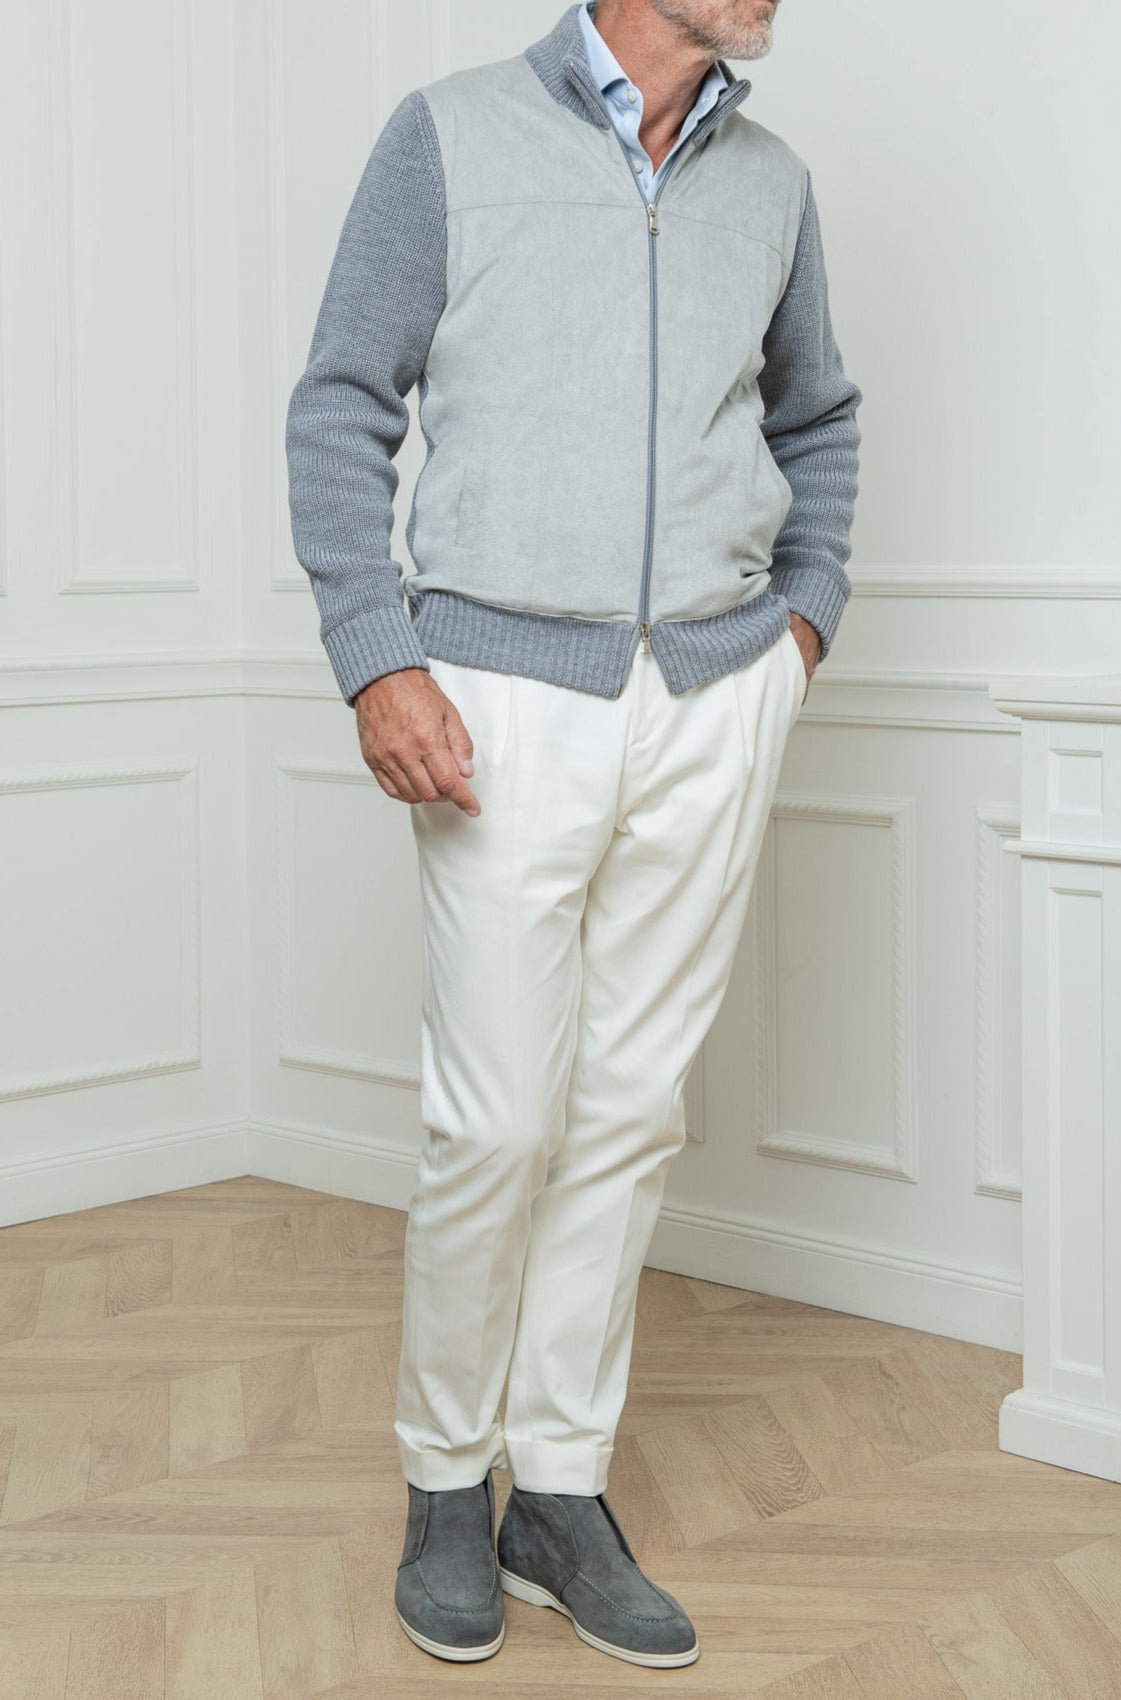 Grey and light grey cardigan - Alcantara & wool - Made in Italy